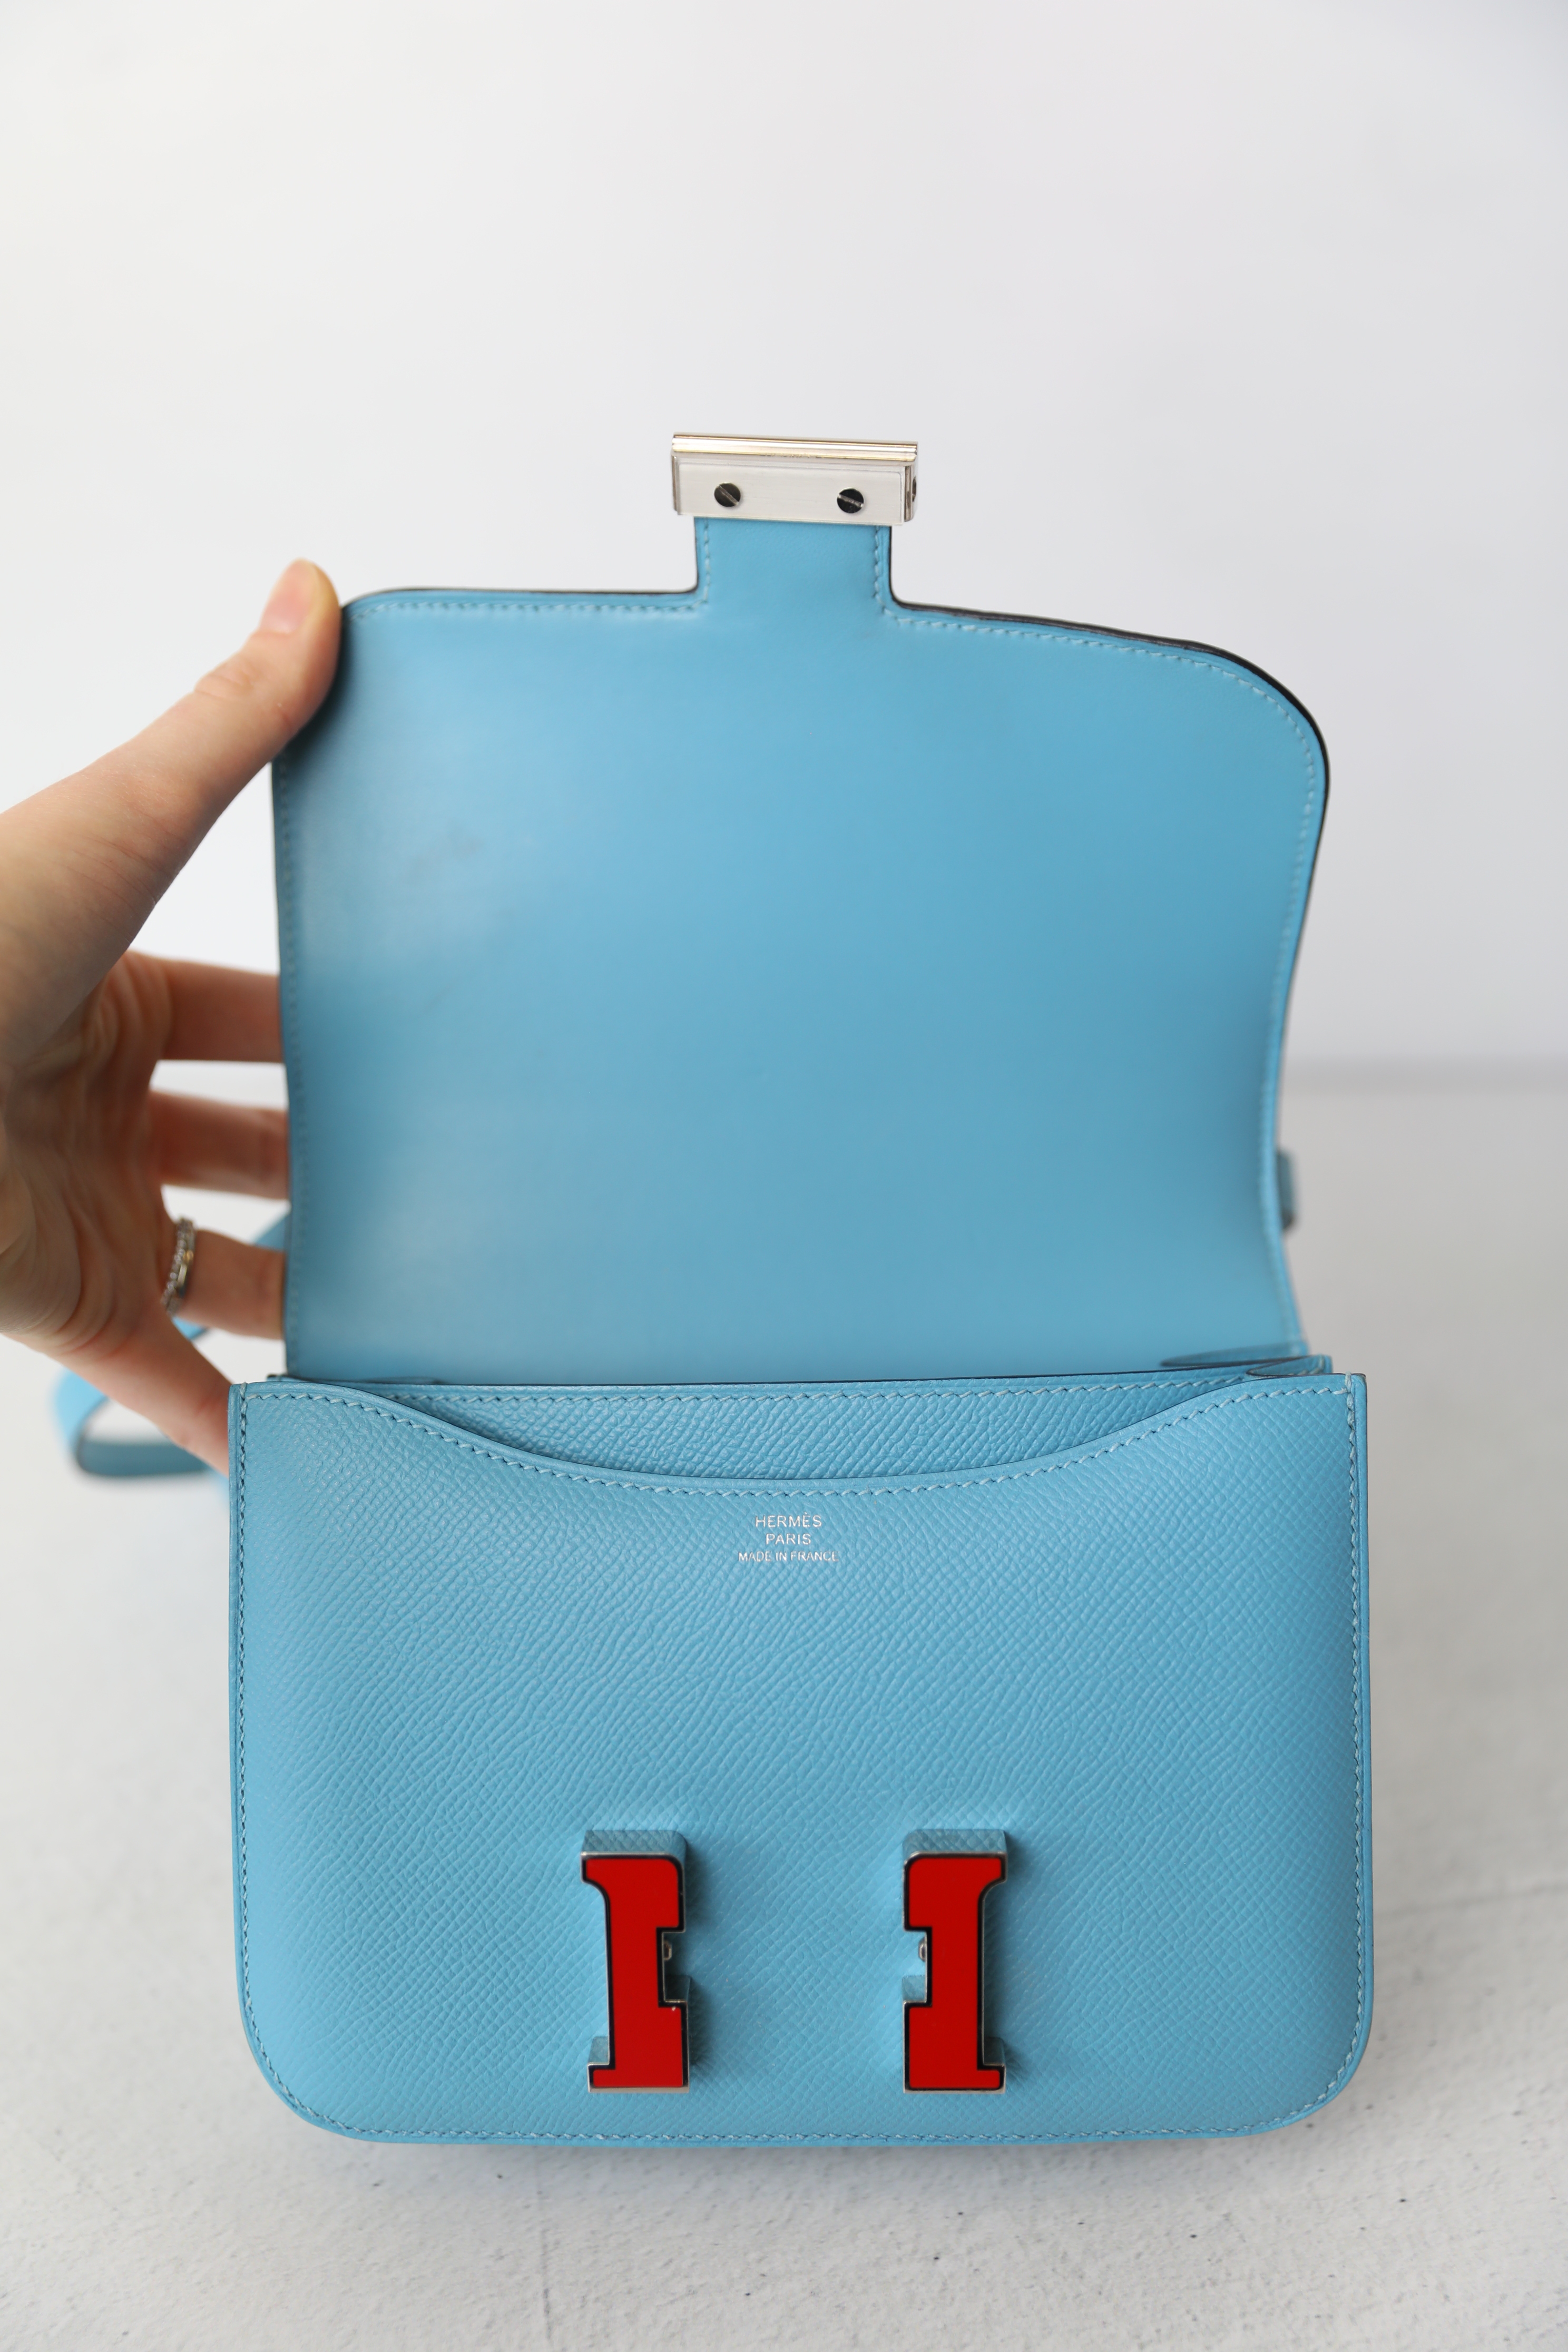 Hermès Bleu Du Nord Birkin 30cm of Epsom Leather with Palladium Hardware, Handbags and Accessories Online, 2019